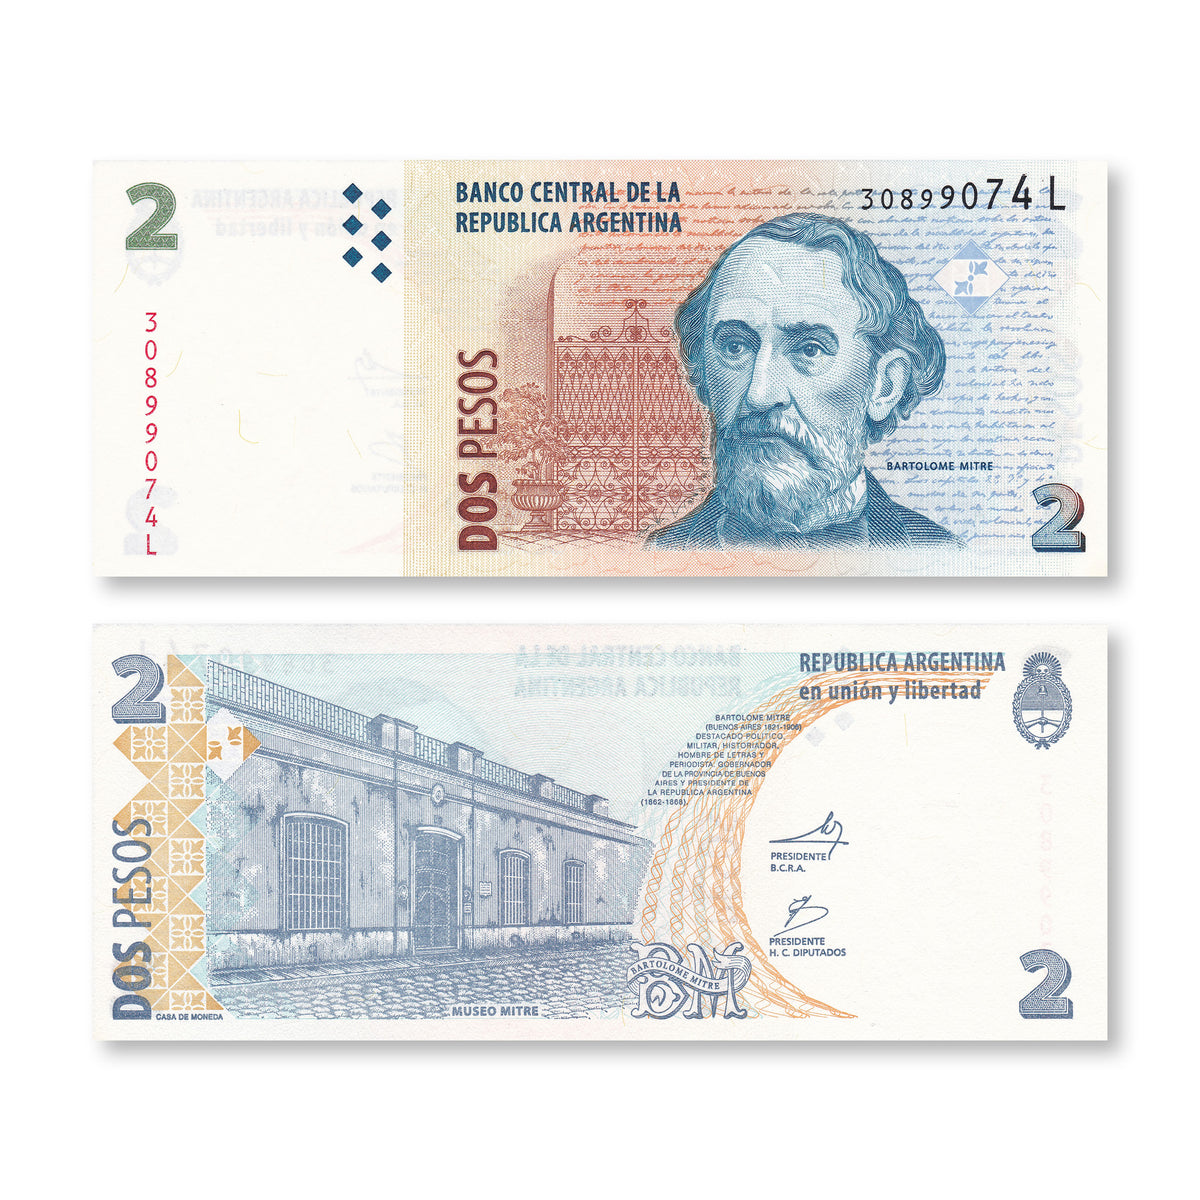 Argentina 2 Pesos, 2010, B405g, P352, UNC - Robert's World Money - World Banknotes